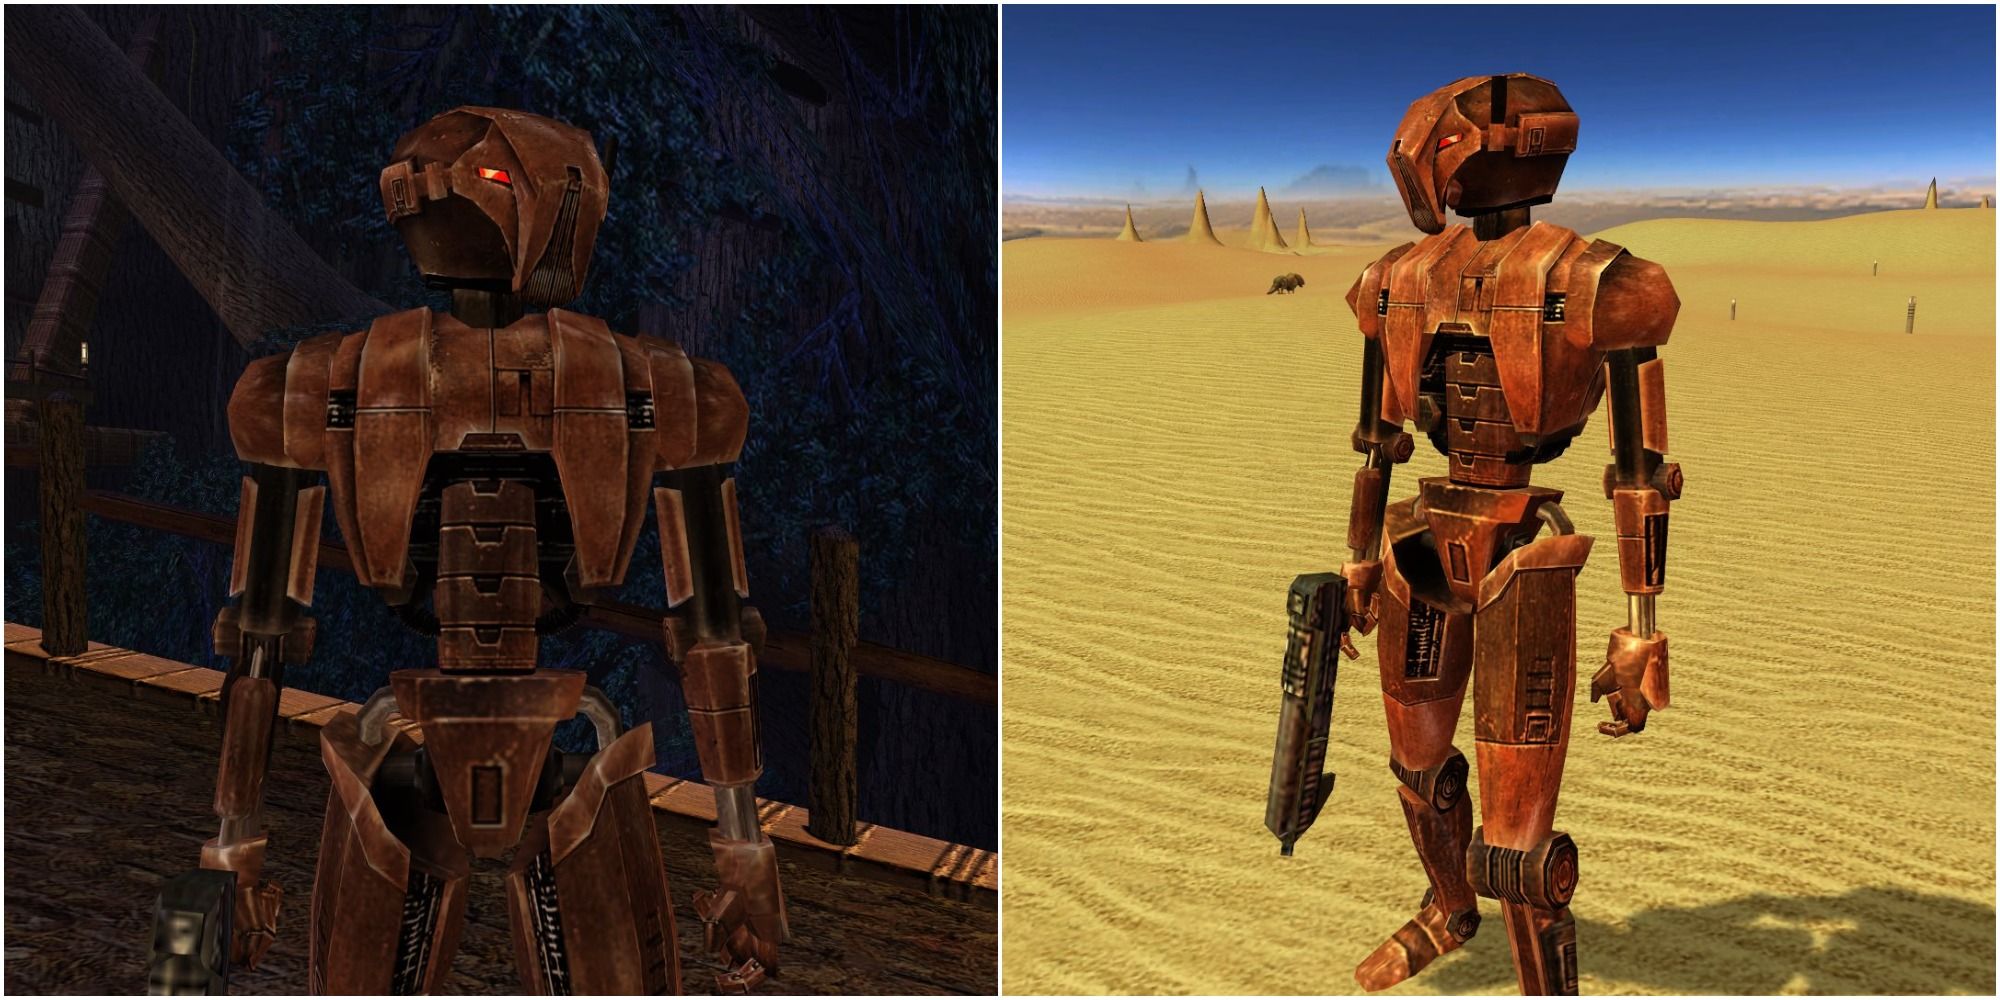 Split image KOTOR HK-47 on Kashyyk and Tatooine waiting to shoot something